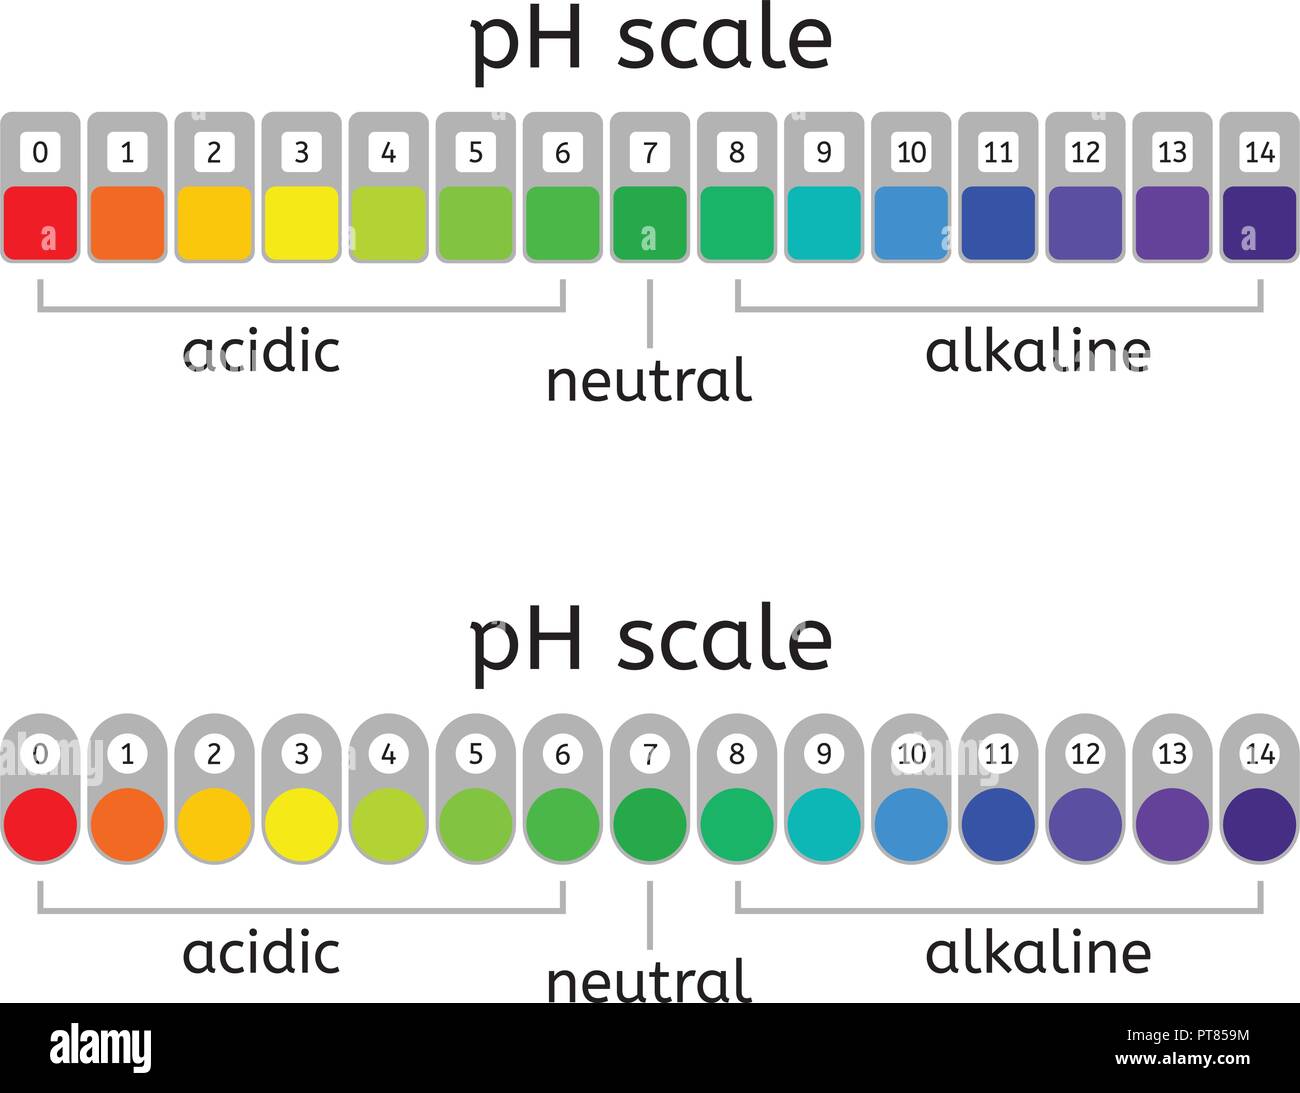 Basic Acidic Chart